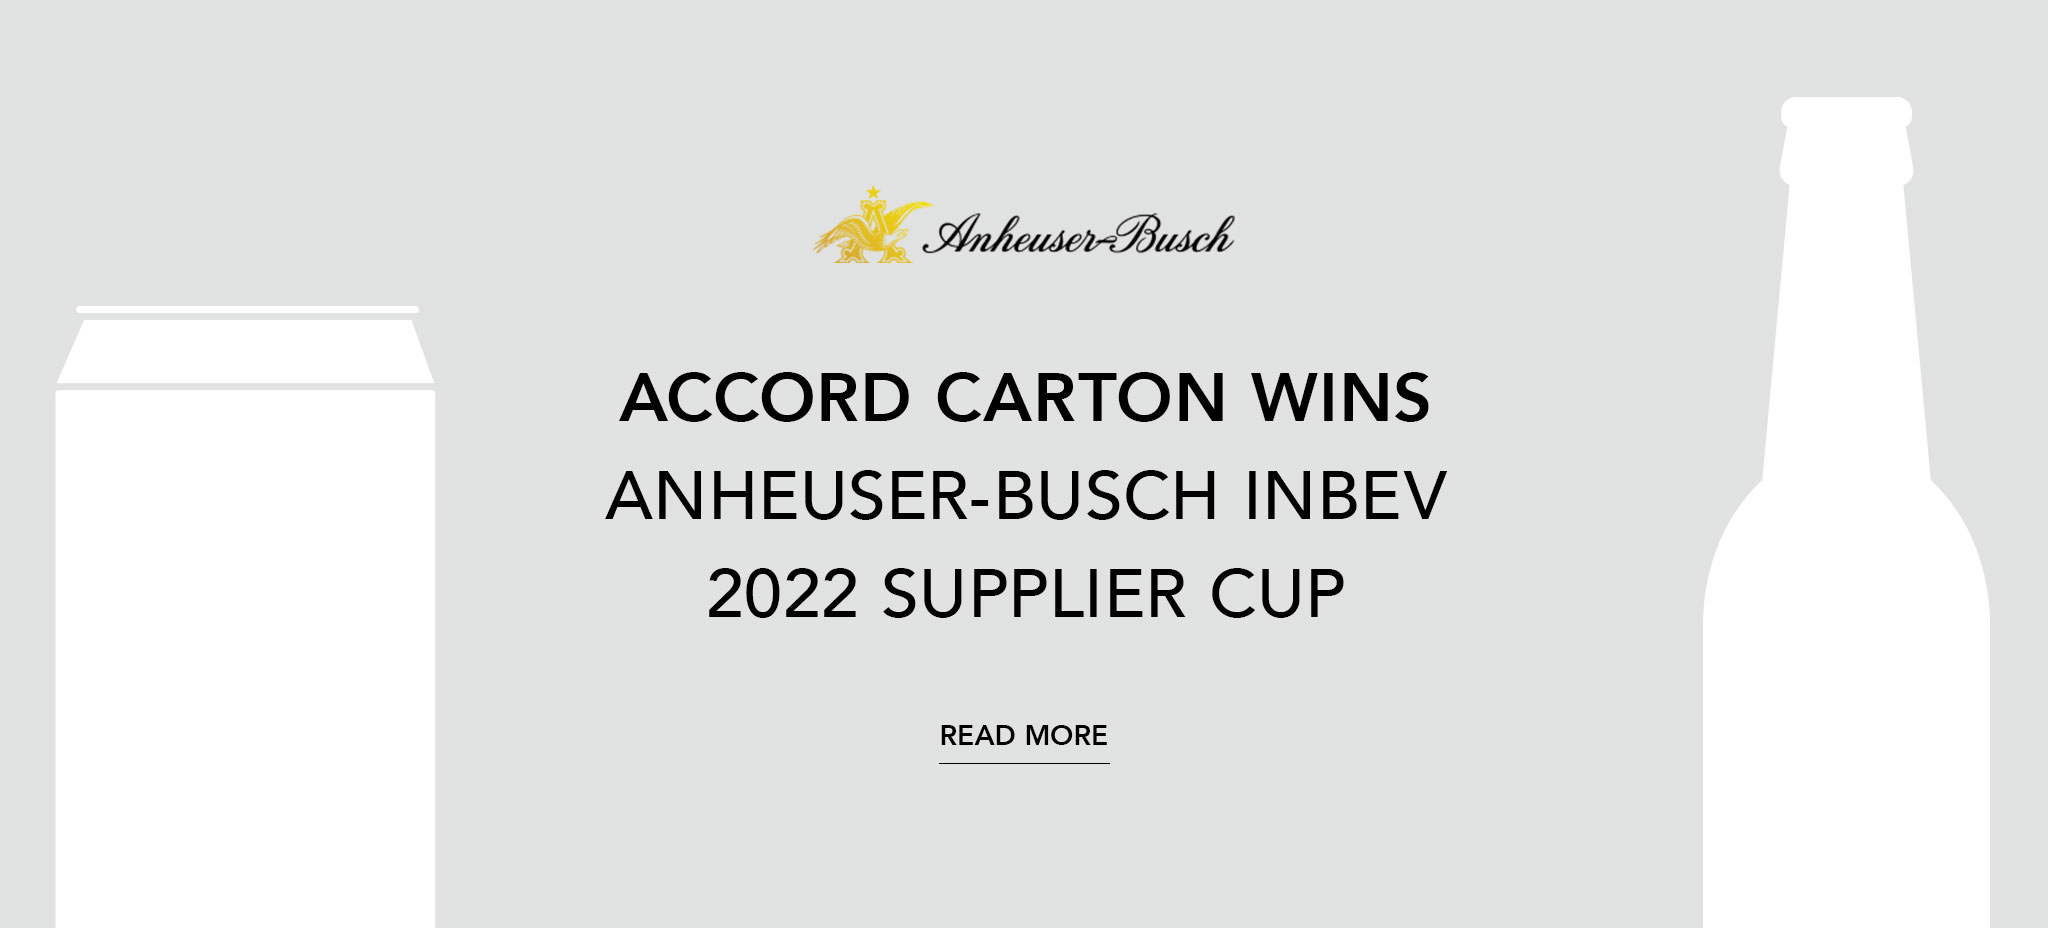 Accord Carton Wins Anheuser-Busch InBev 2022 Supplier Cup